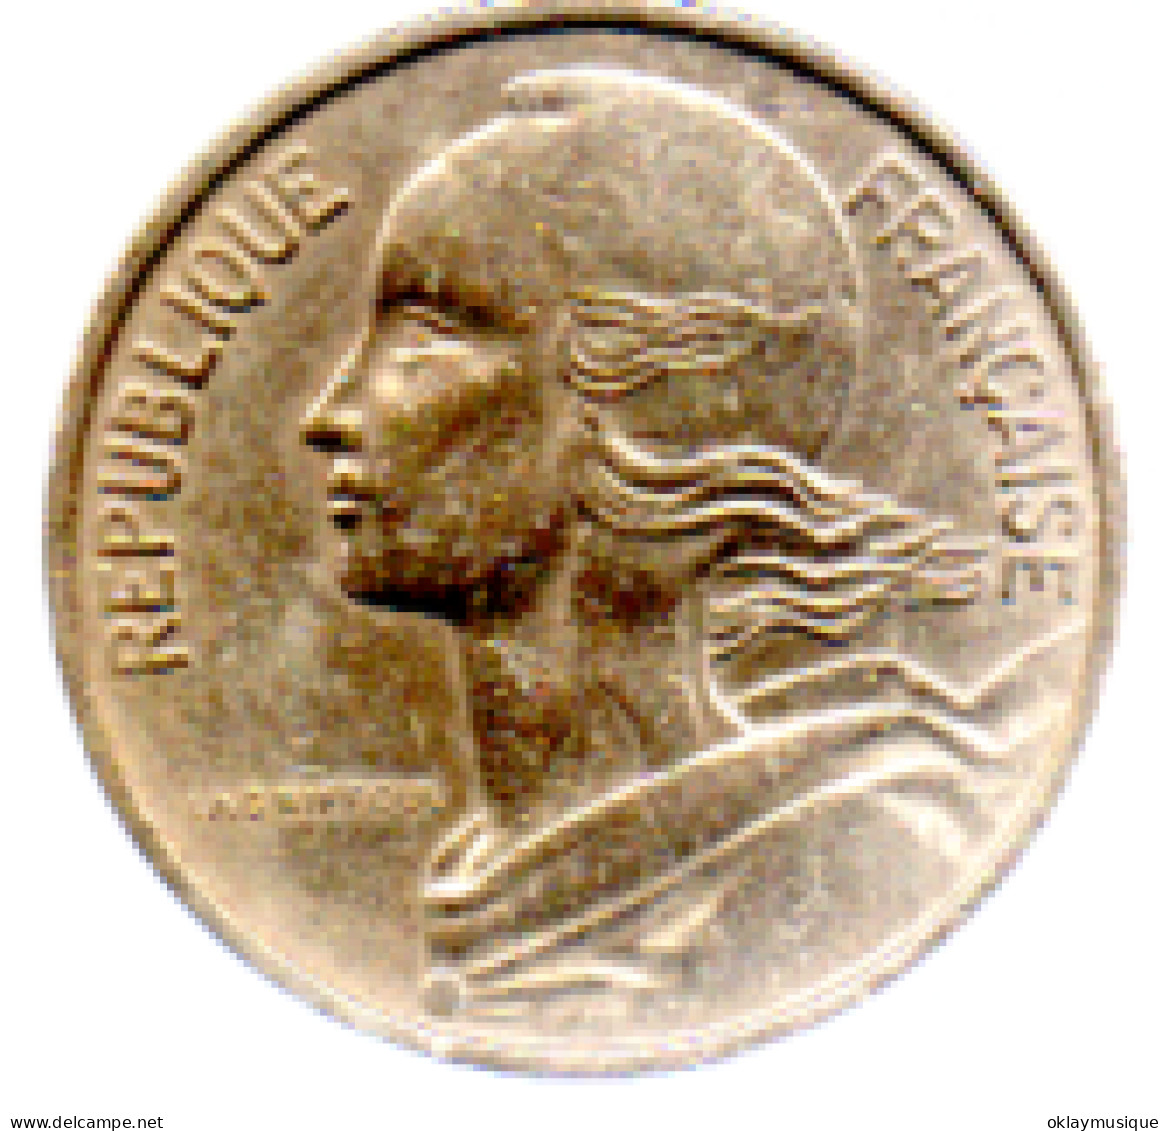 10 Centimes 1978 - 10 Centimes